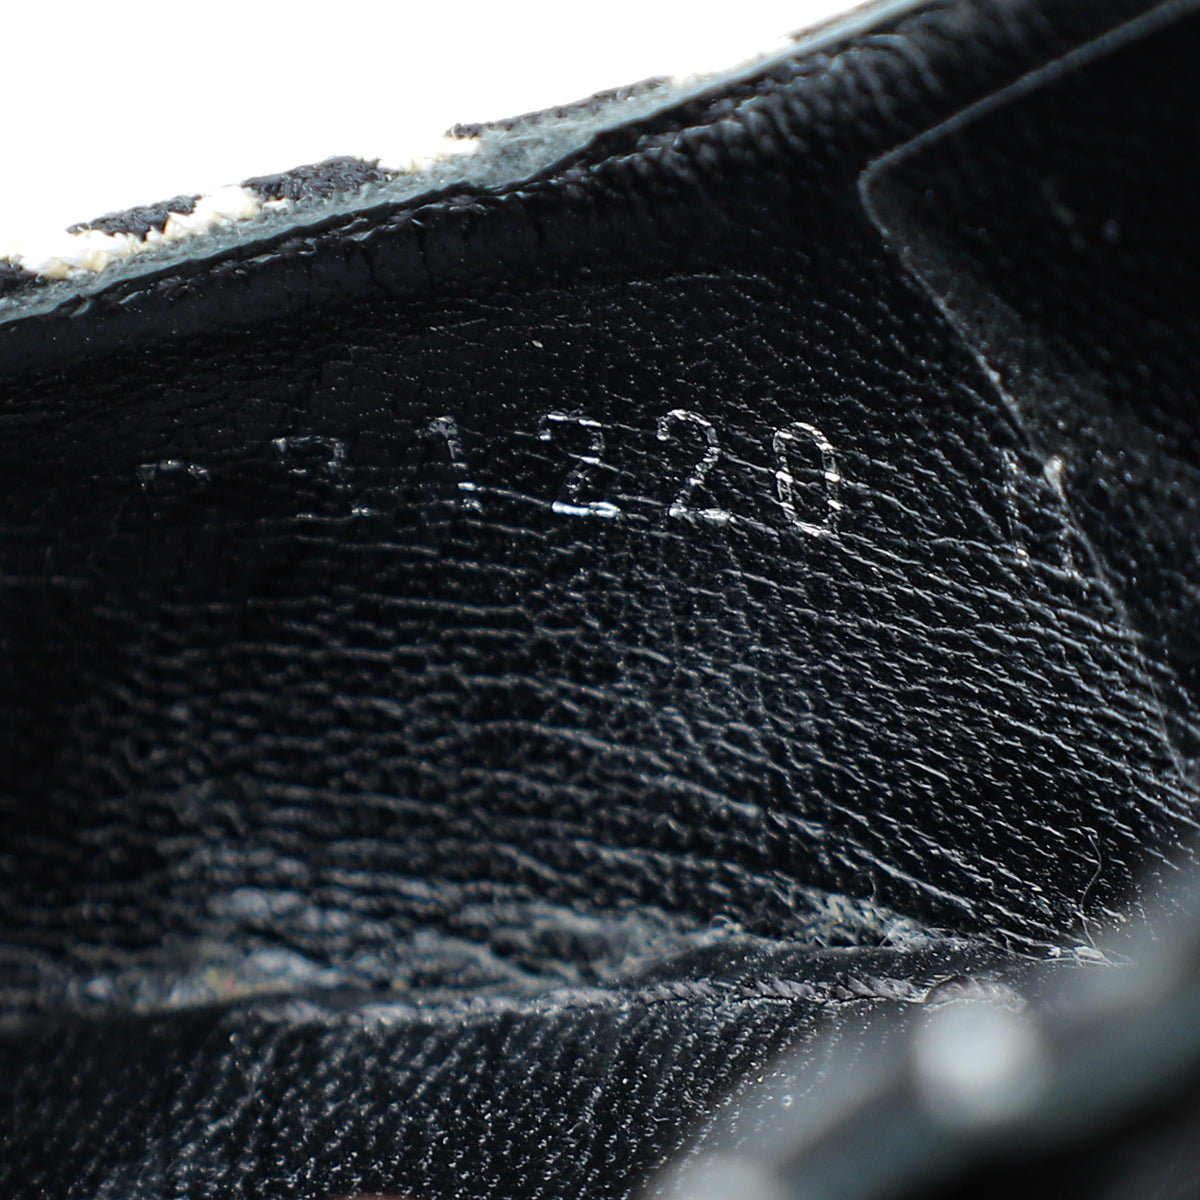 Louis Vuitton Since 1854 Stellar Leather Sneaker Grey